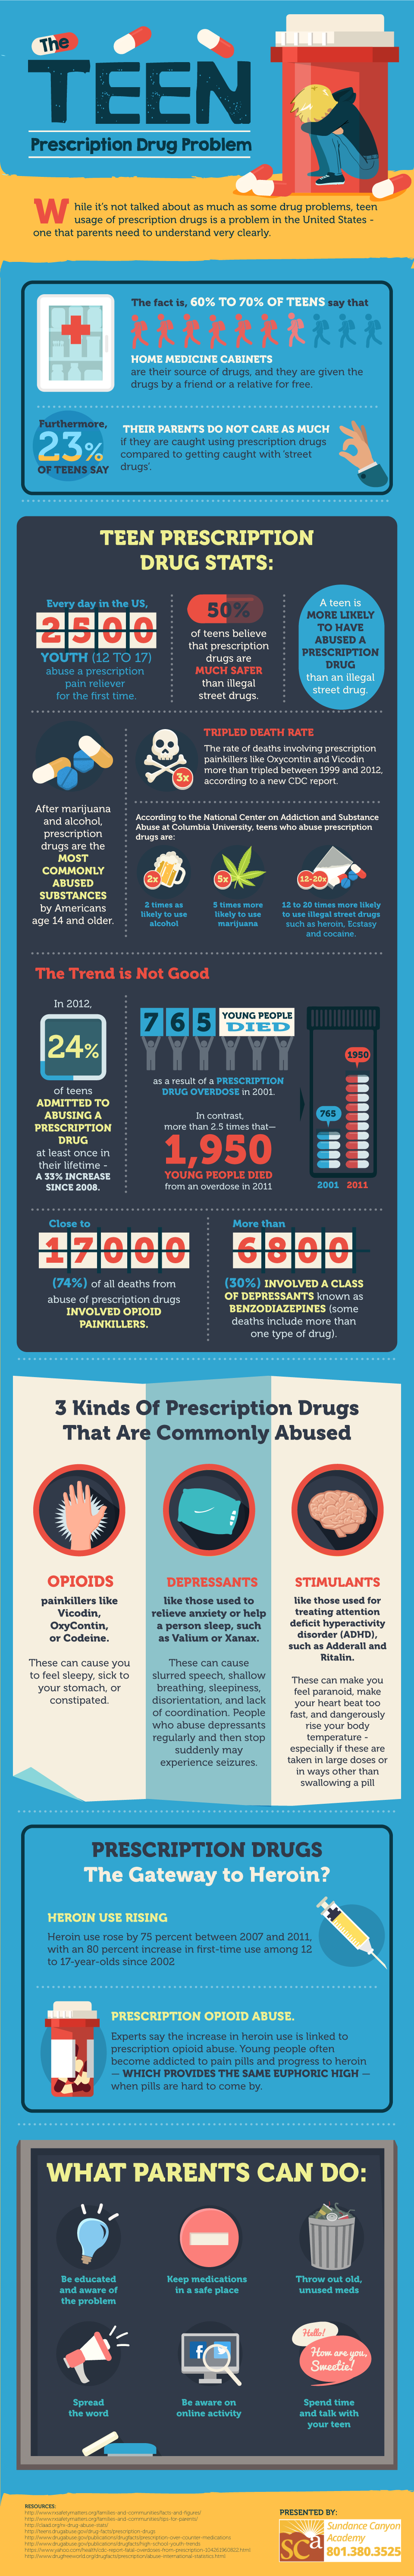 Teen Prescription Drug Use Problem